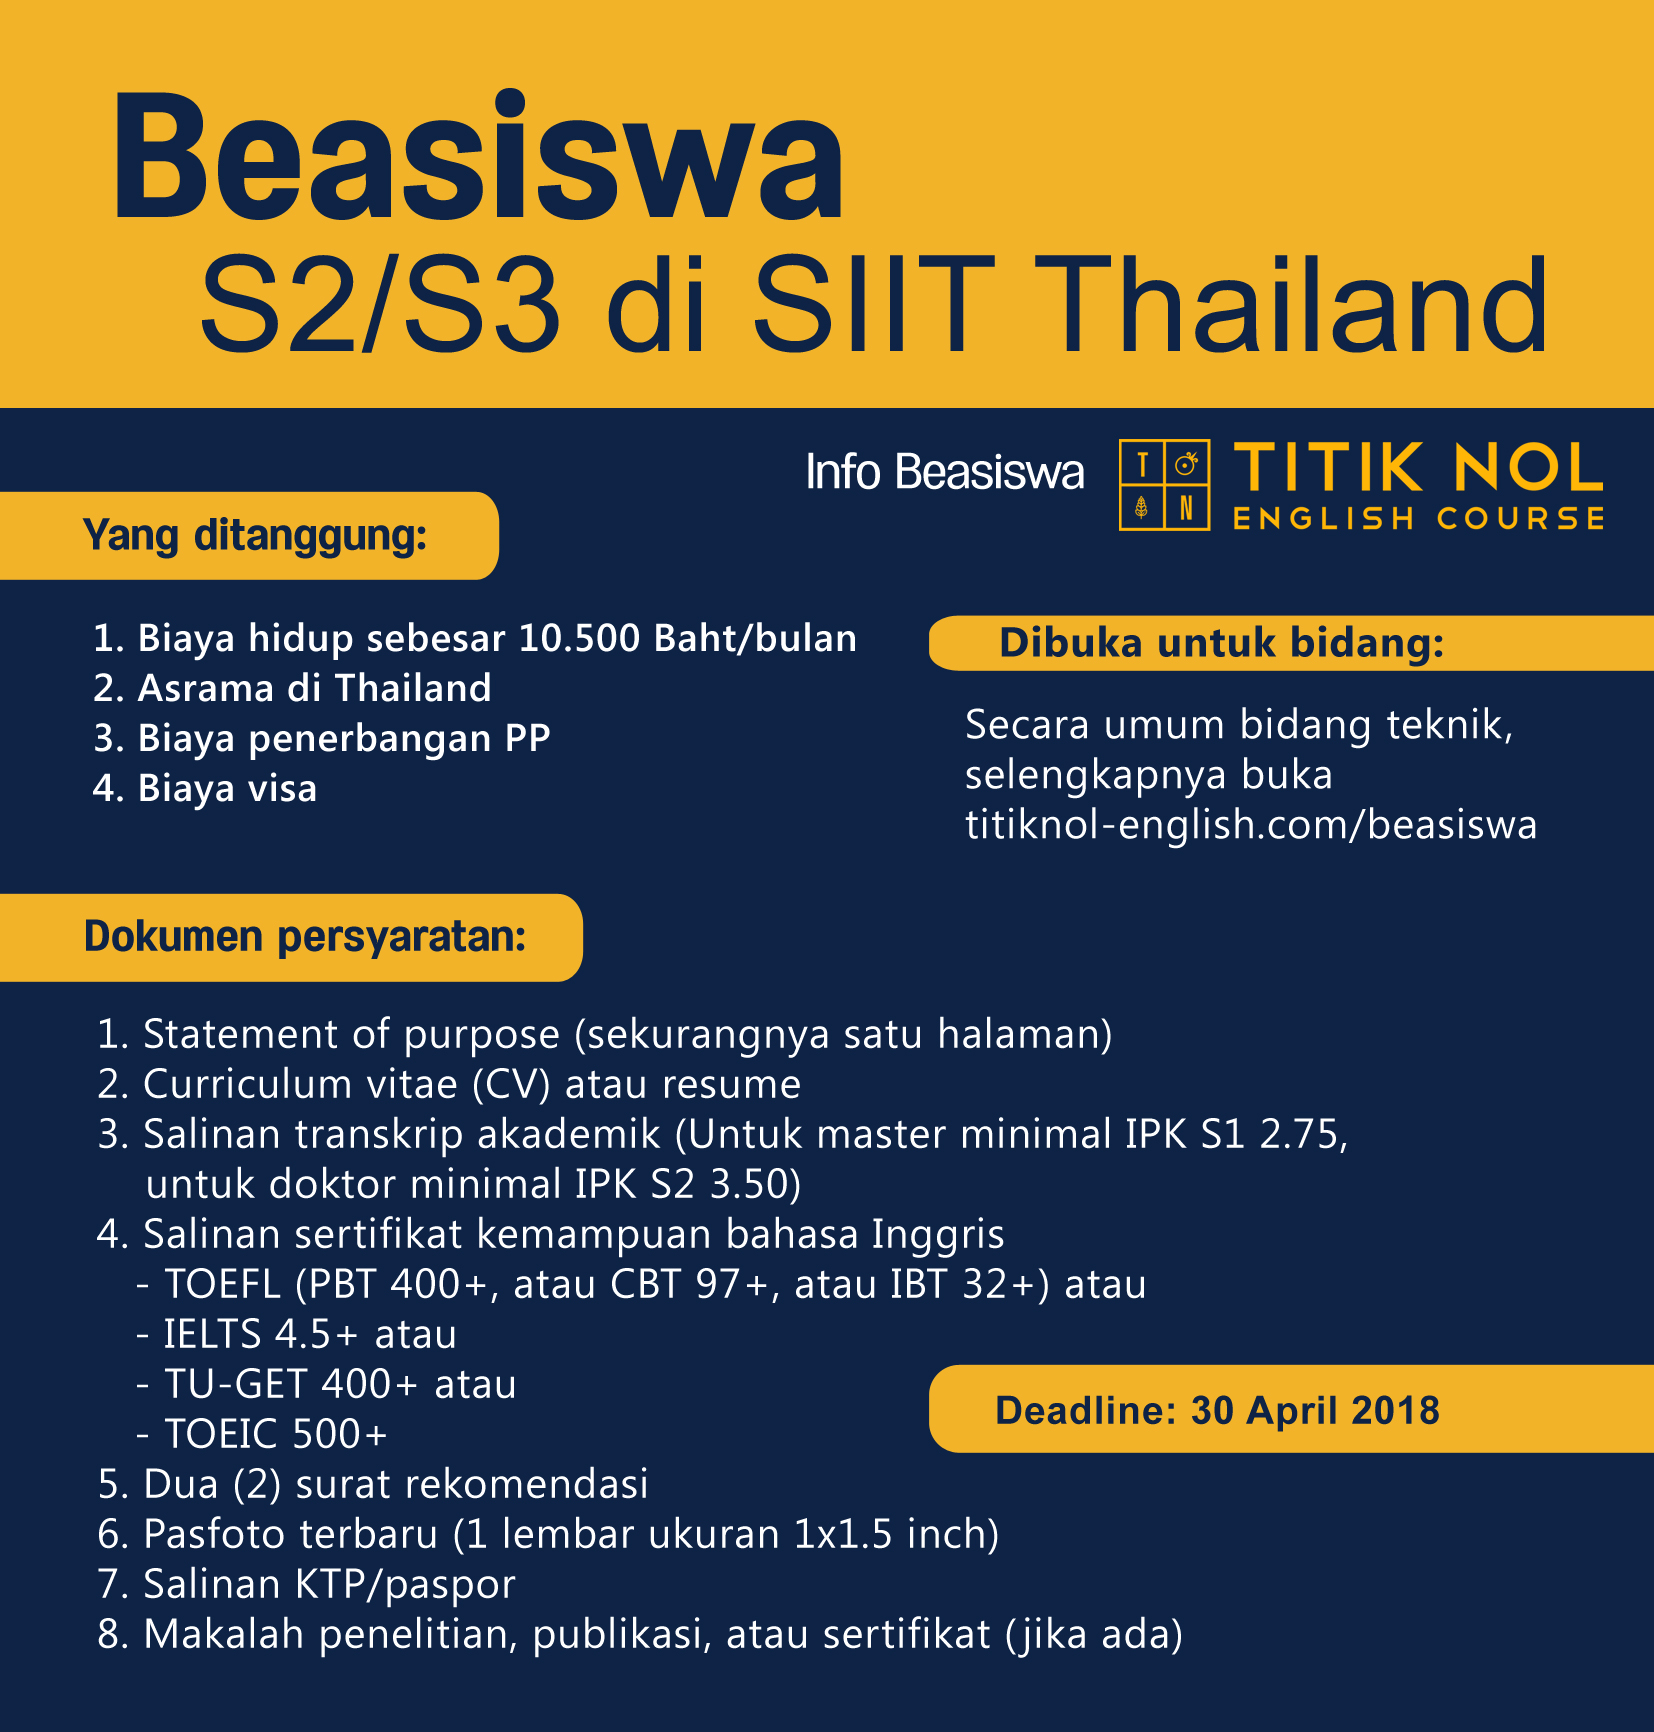 Beasiswa S2/S3 Thailand - Titik Nol English Course